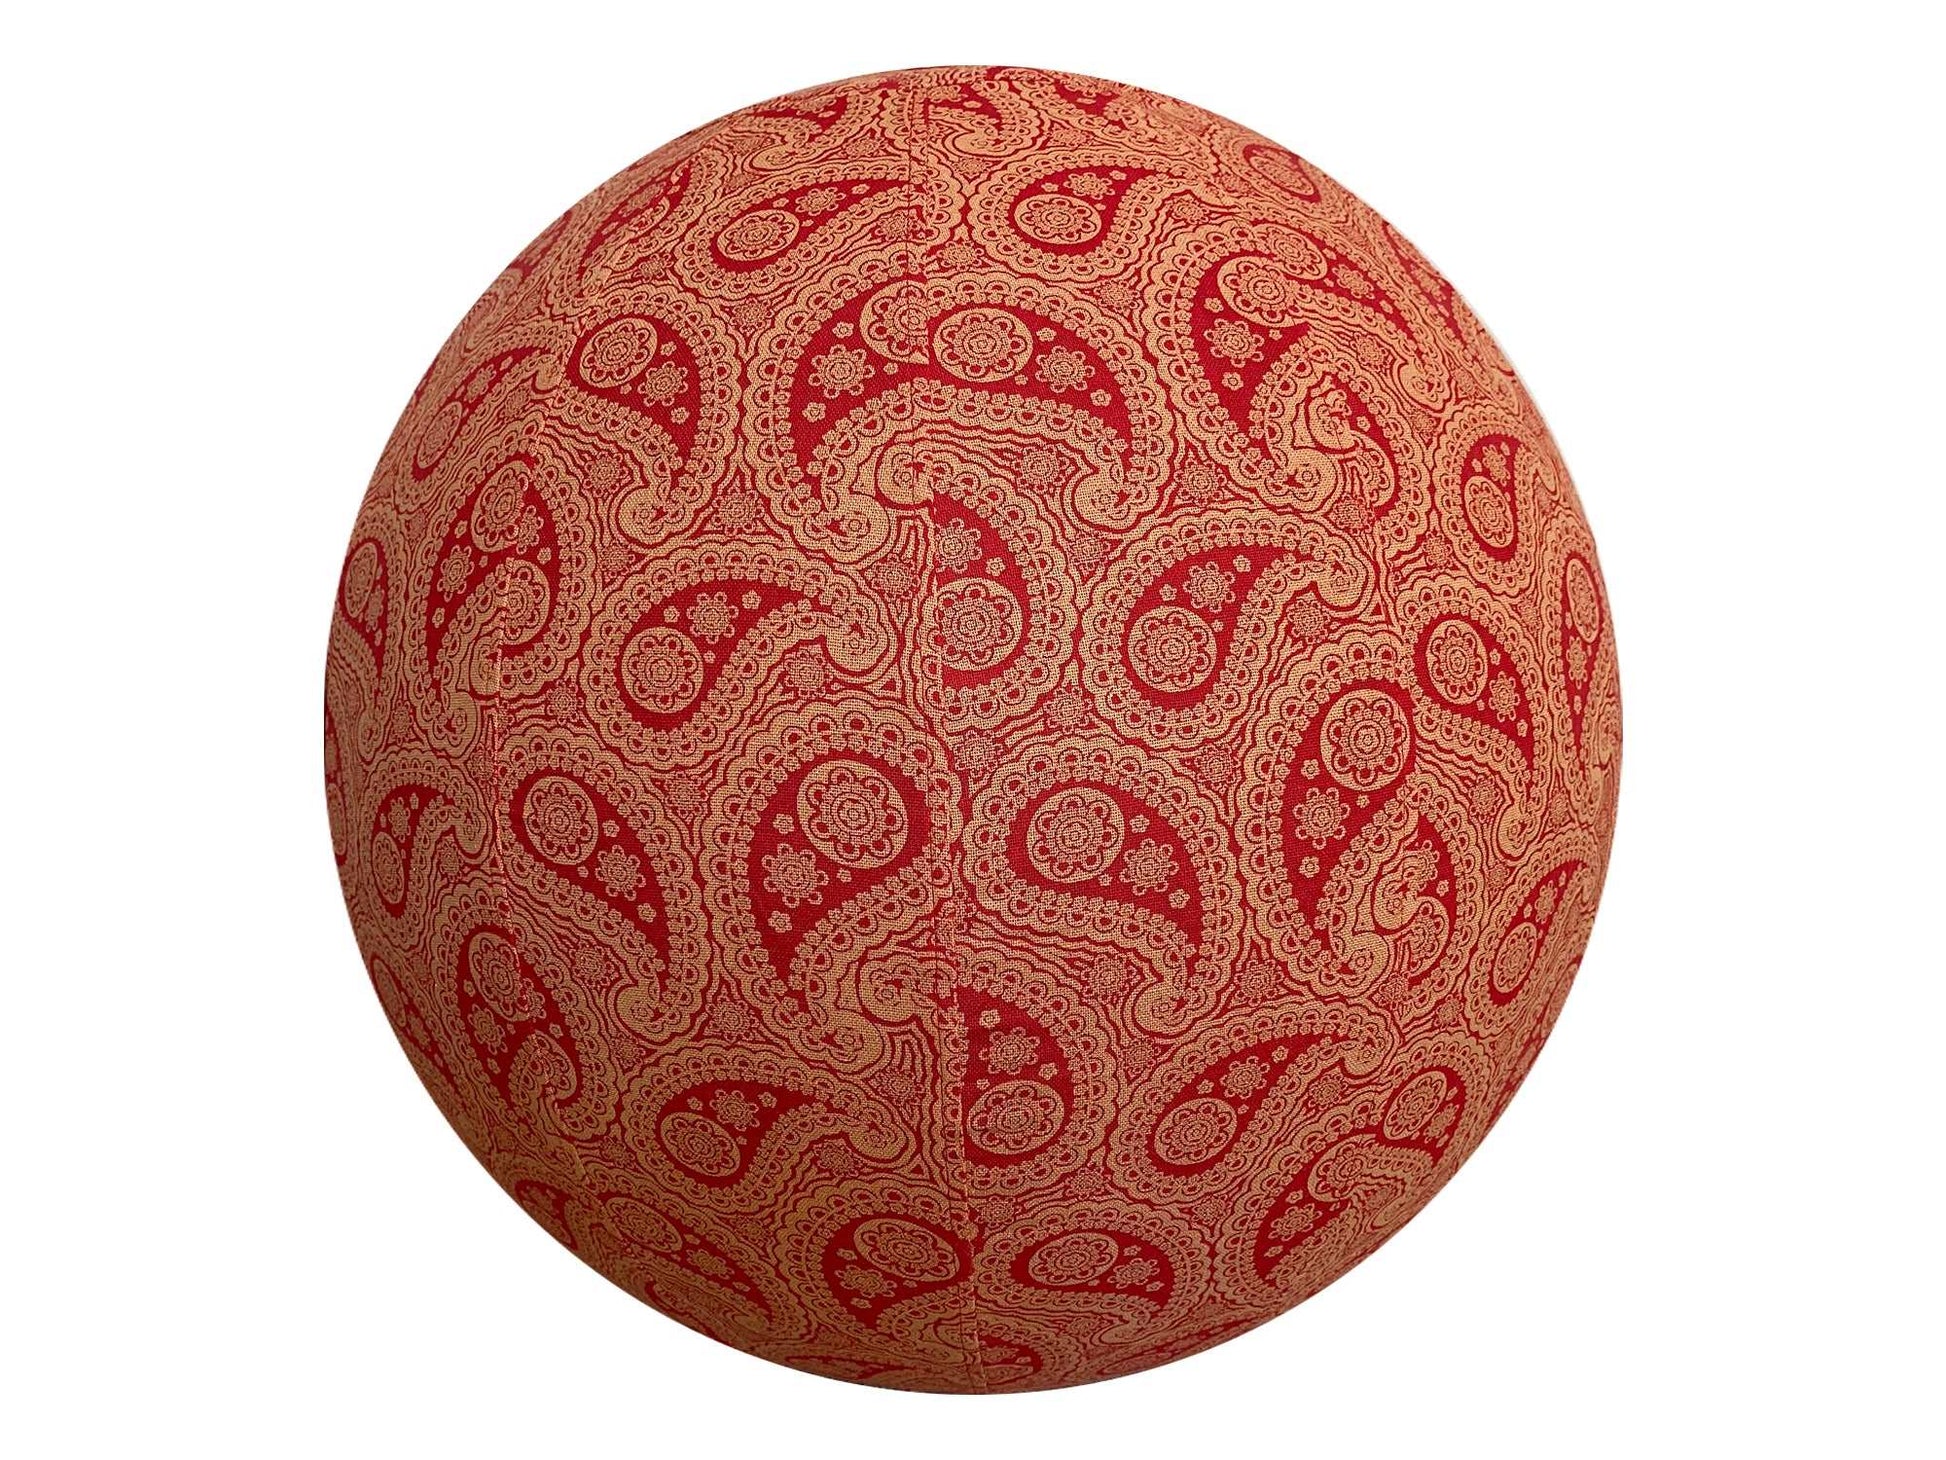 65cm Balance Ball / Yoga Ball Cover: Poppy Paisley